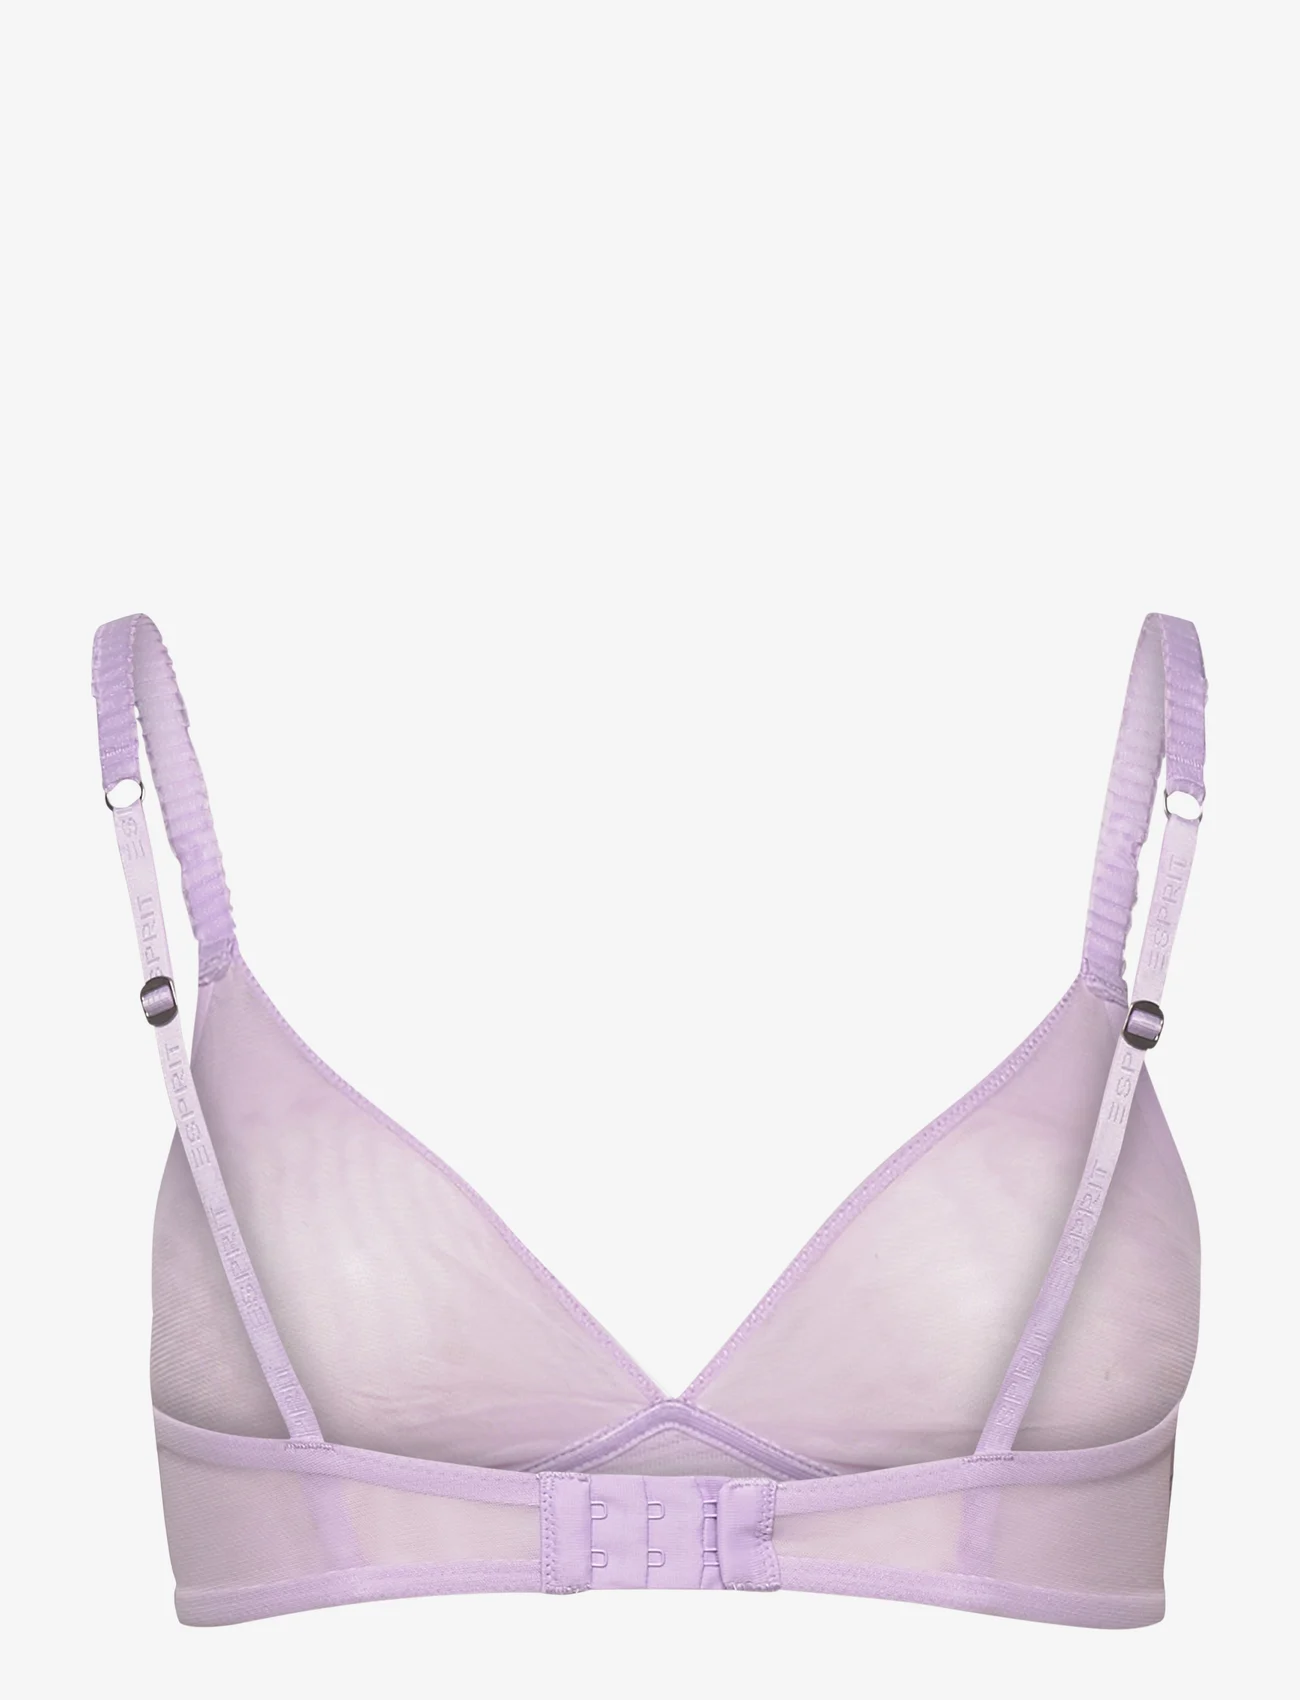 Esprit Bodywear Women - Recycled: unpadded, non-wired bra - bralette - violet - 1